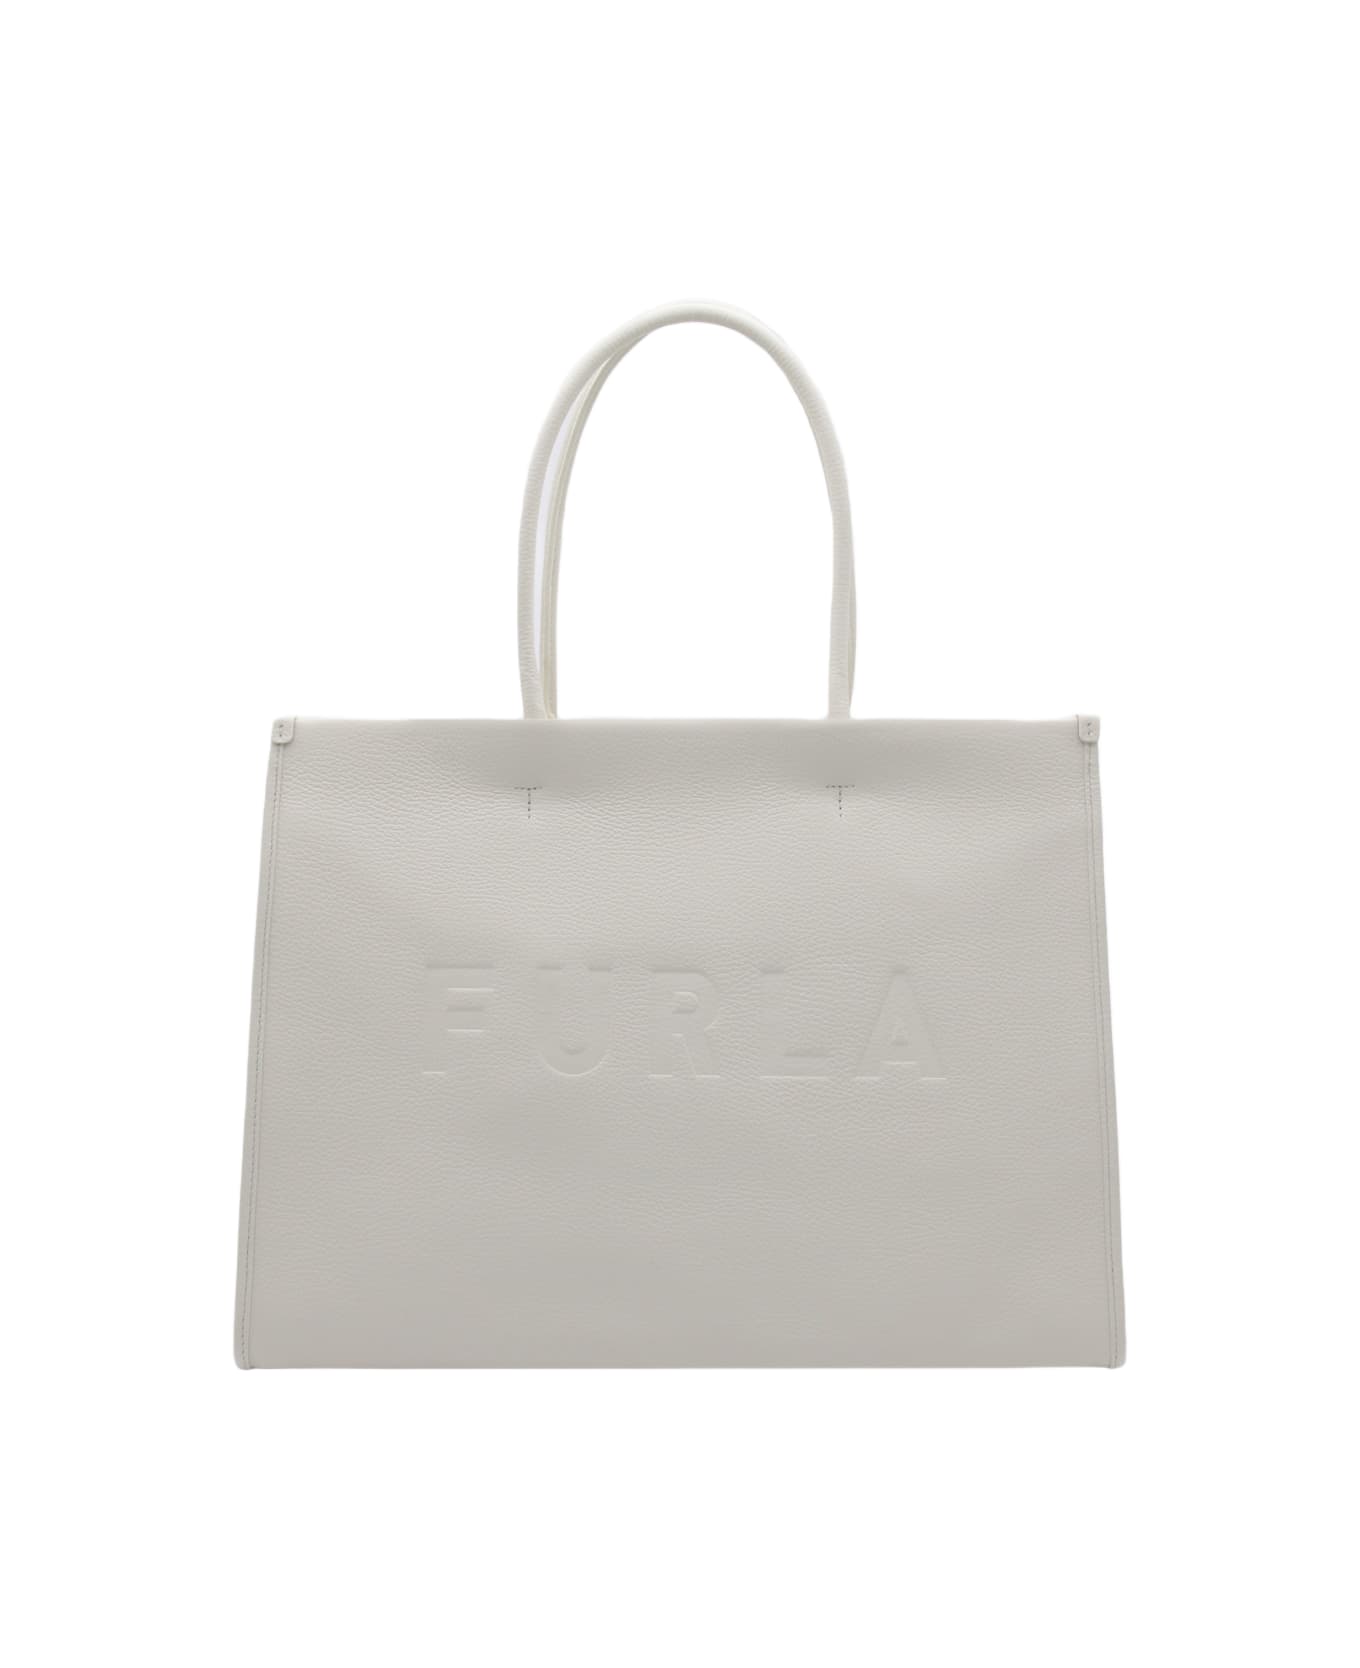 Furla Marshmallow Leather Opportunity Tote Bag - White/Black